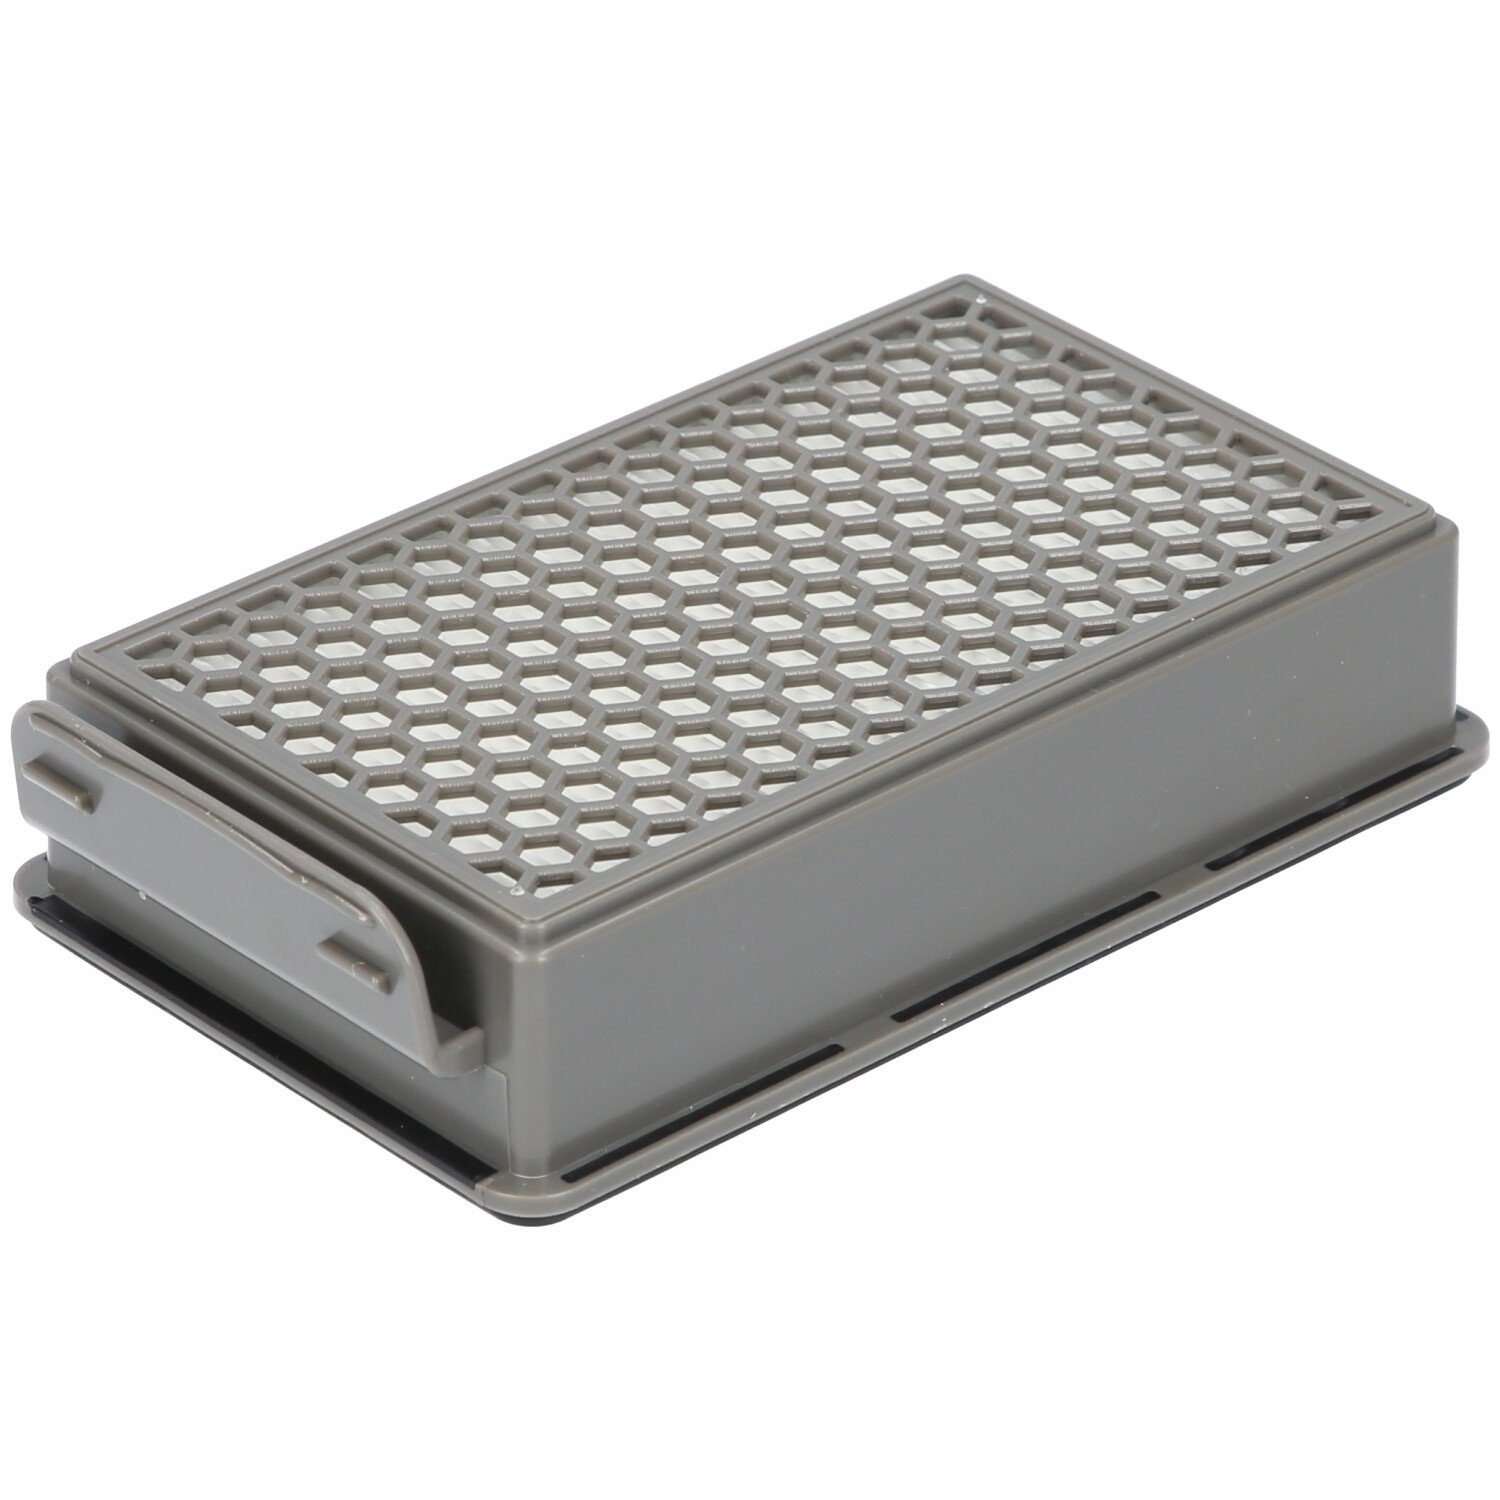 Filter-Set / / geeignet für / ZR005901 für McFilter TW3724RA TW3753EA Filterkassette, Alternative TW3731RA 1x TW3786RA, Tefal Rundfilter, 1x